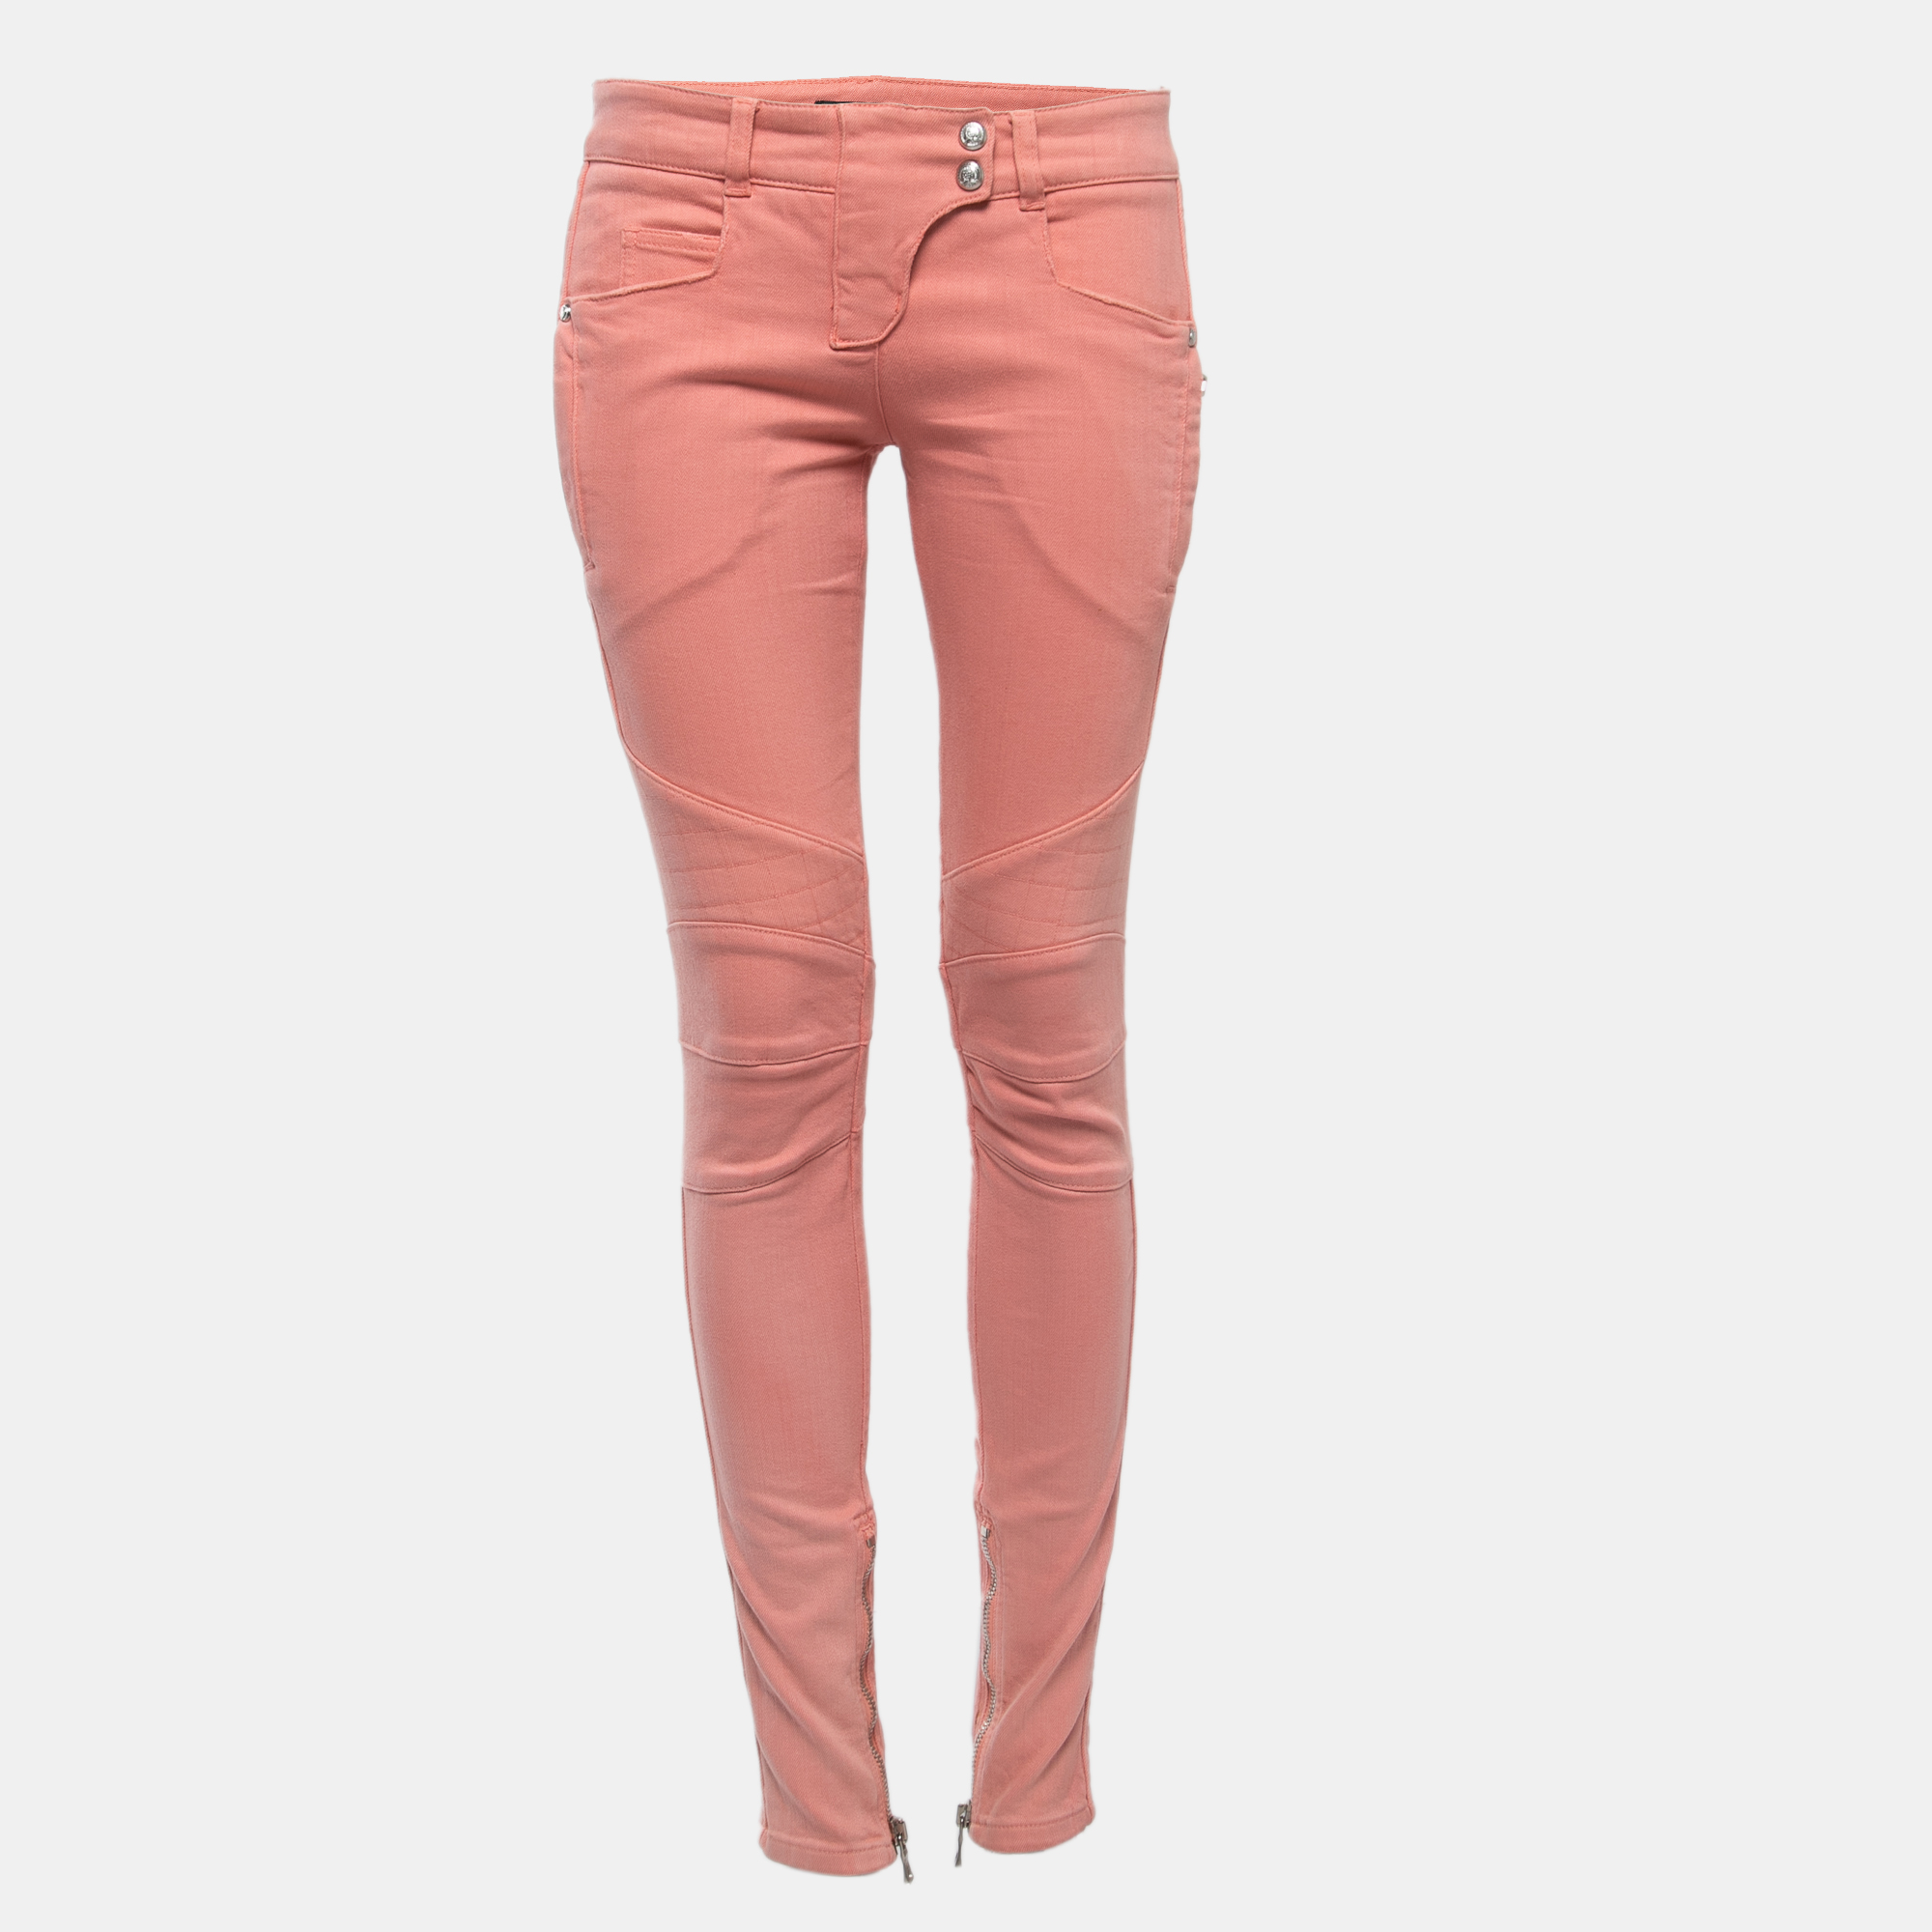 Balmain pink denim buttoned skinny jeans m waist 30"